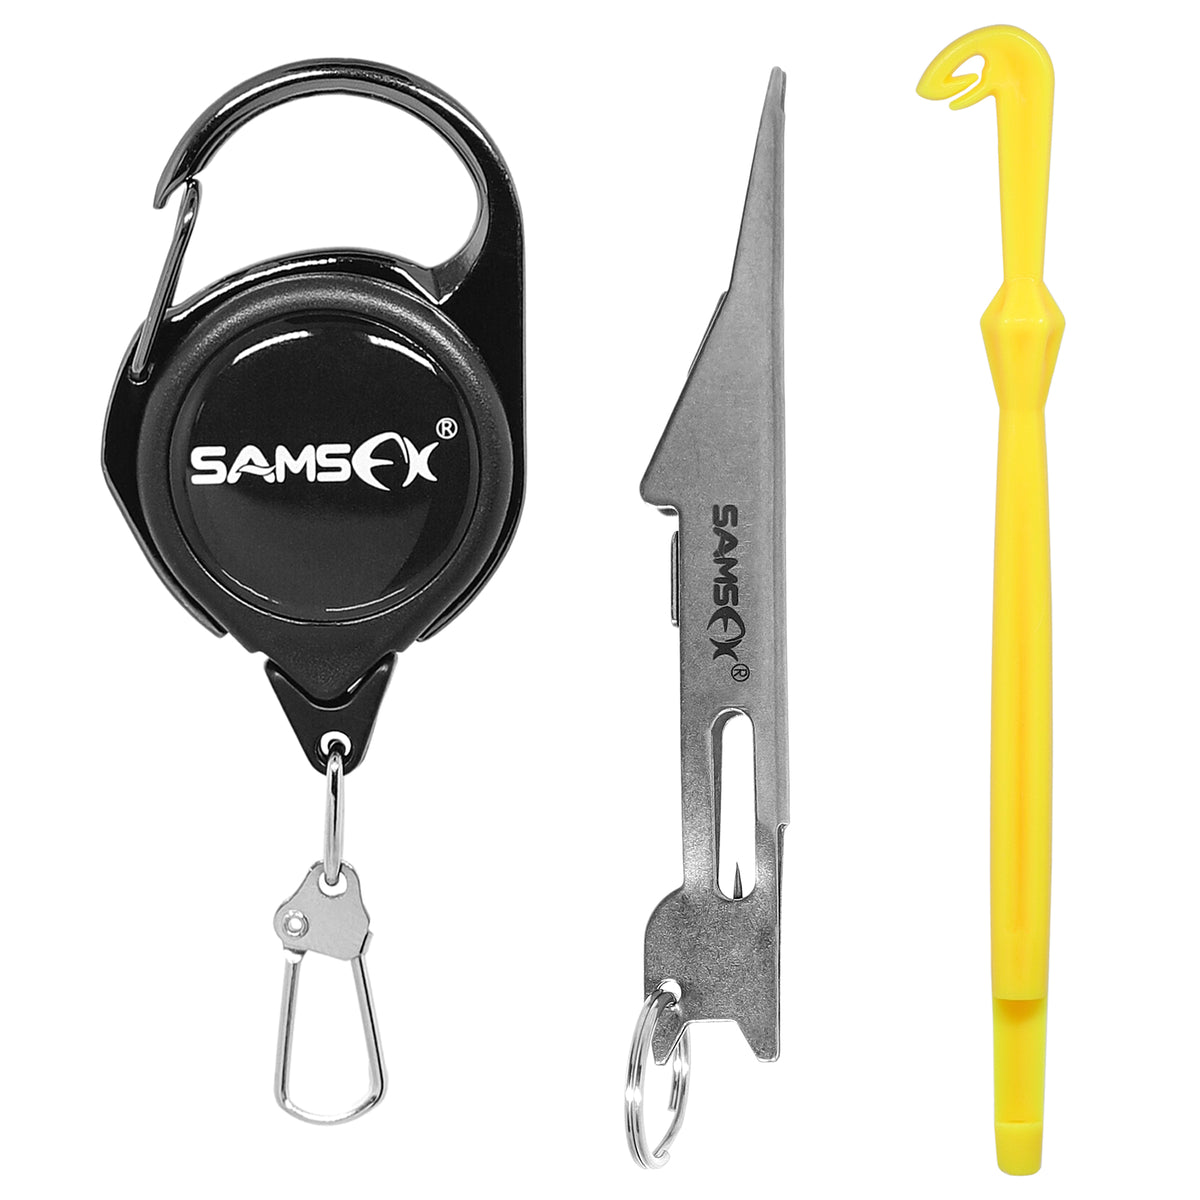 SAMSFX Fly Fishing Knot Tying Tool, Loop Tyer and Retractors